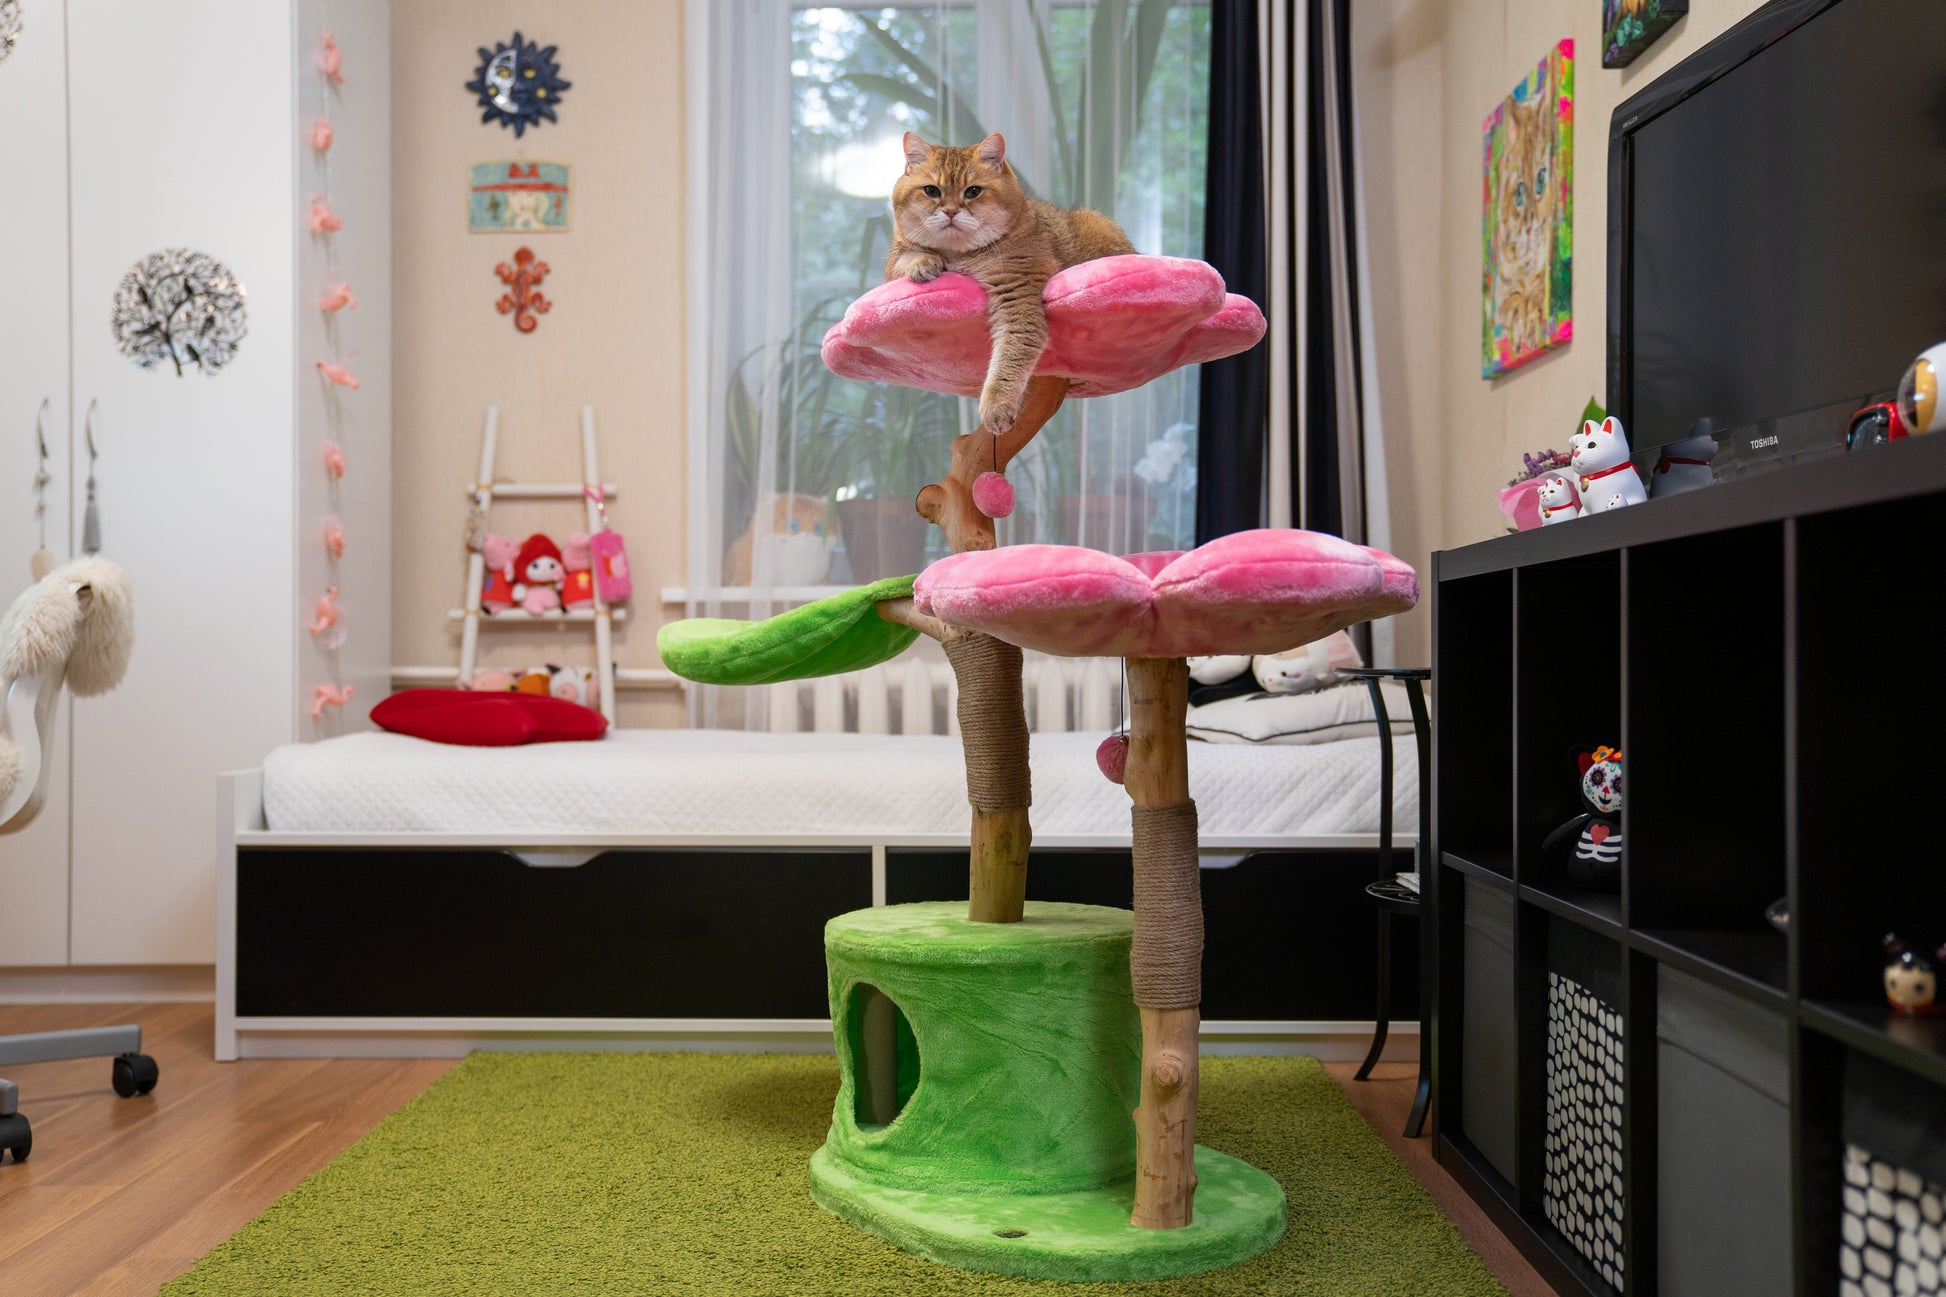 Azalea tres - a stylish floral cat tree for your feline friend's comfort